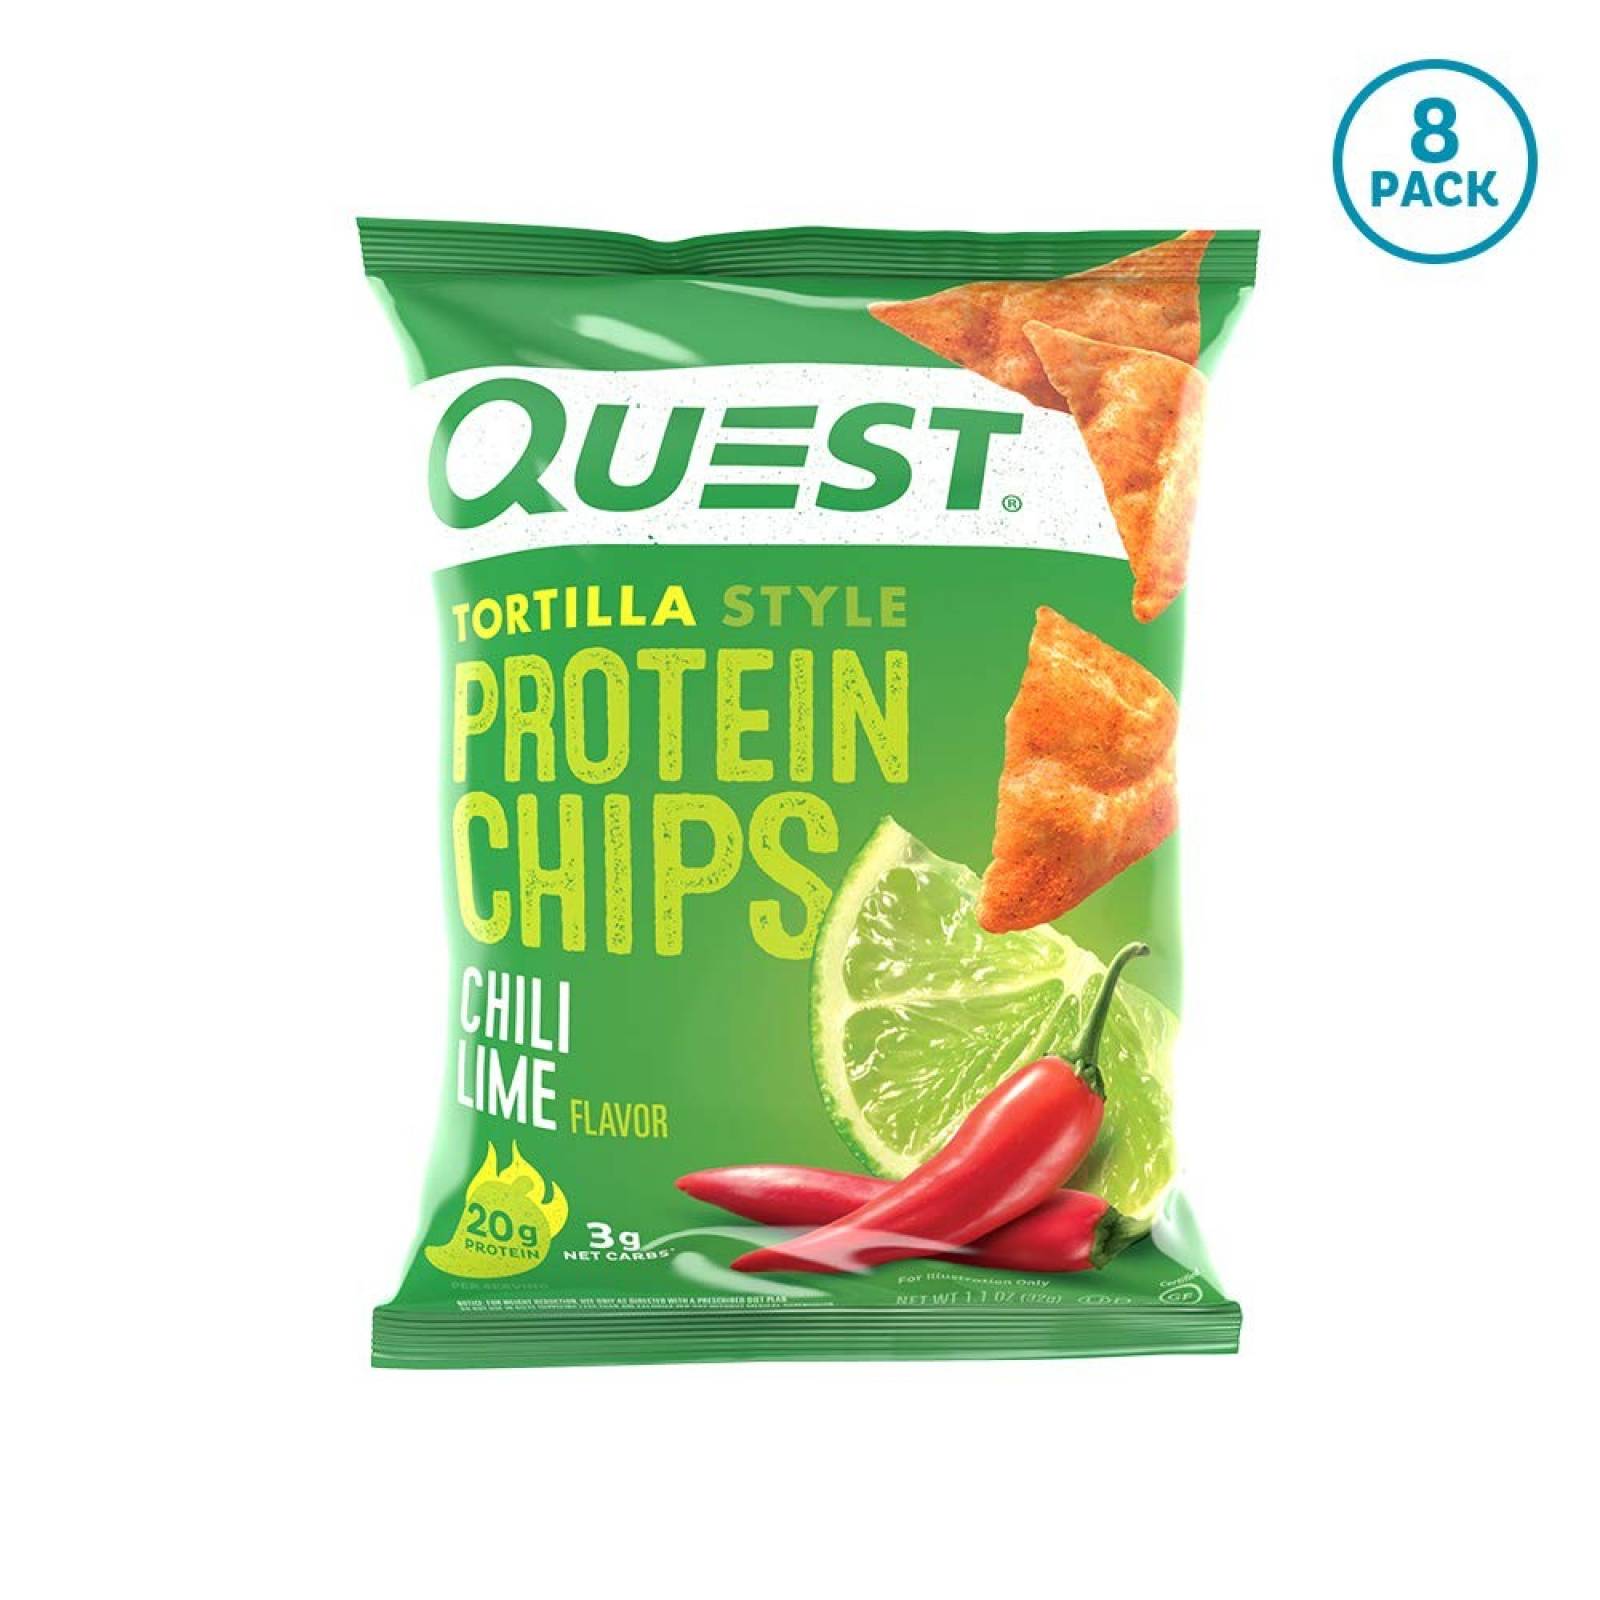 Chips Proteína Quest Nutrition Chile-Limón Tortilla -8 pzs